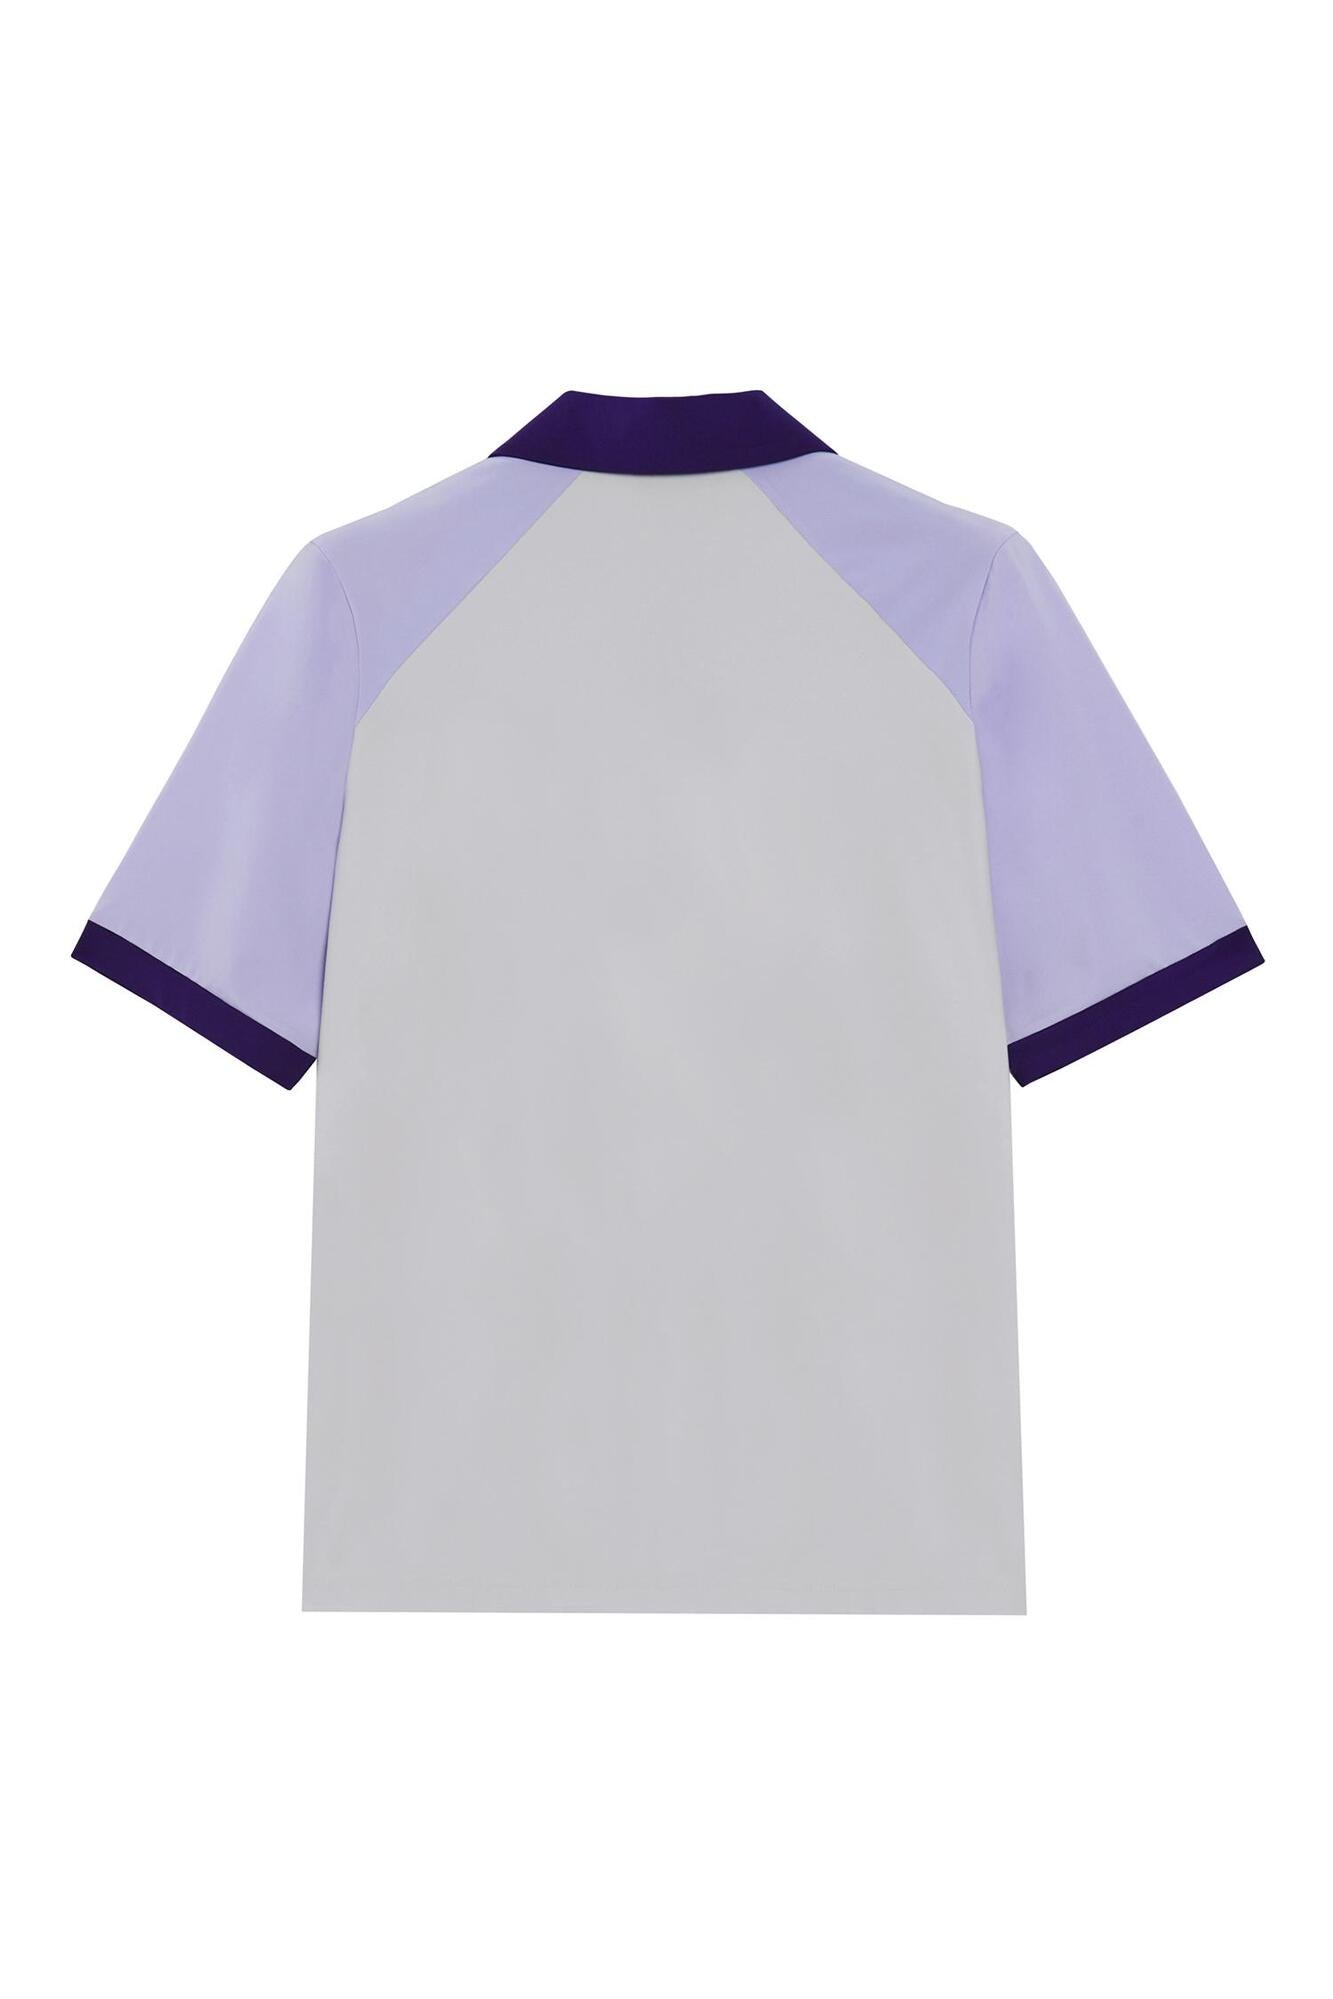 NEU Golf Raglan Setup T-Shirt Purple